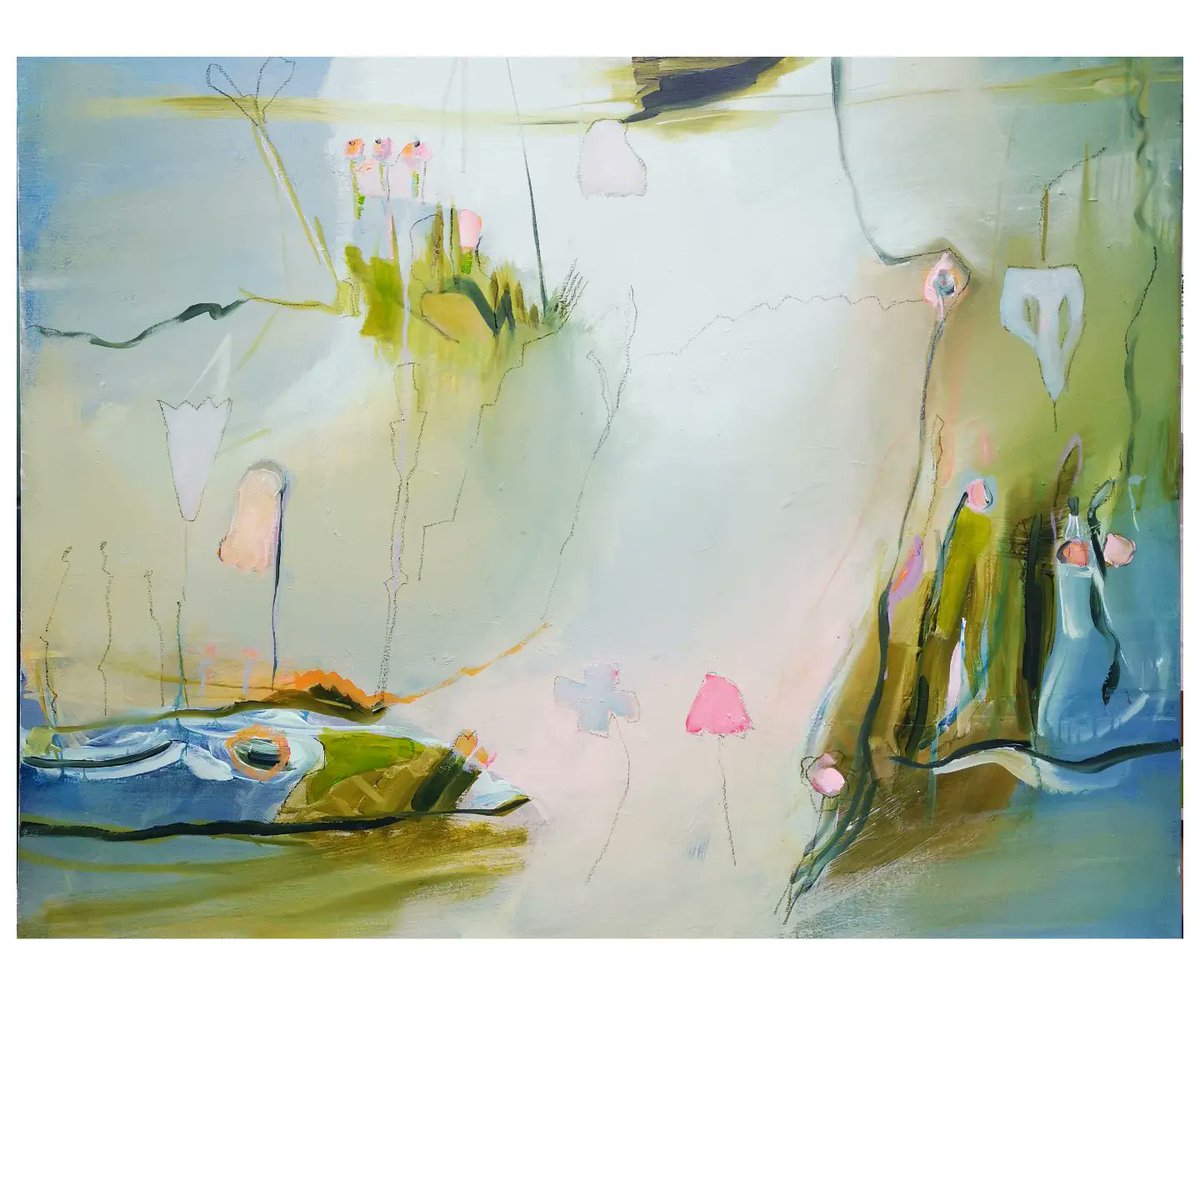 Pond Life inspiration surrealism
72x92cm
Acrylic on canvas
#abstractart #art #surrealism #painting #abstractpainting #WomensArt #artcollectors #artstudio #workingartist #artisimportant